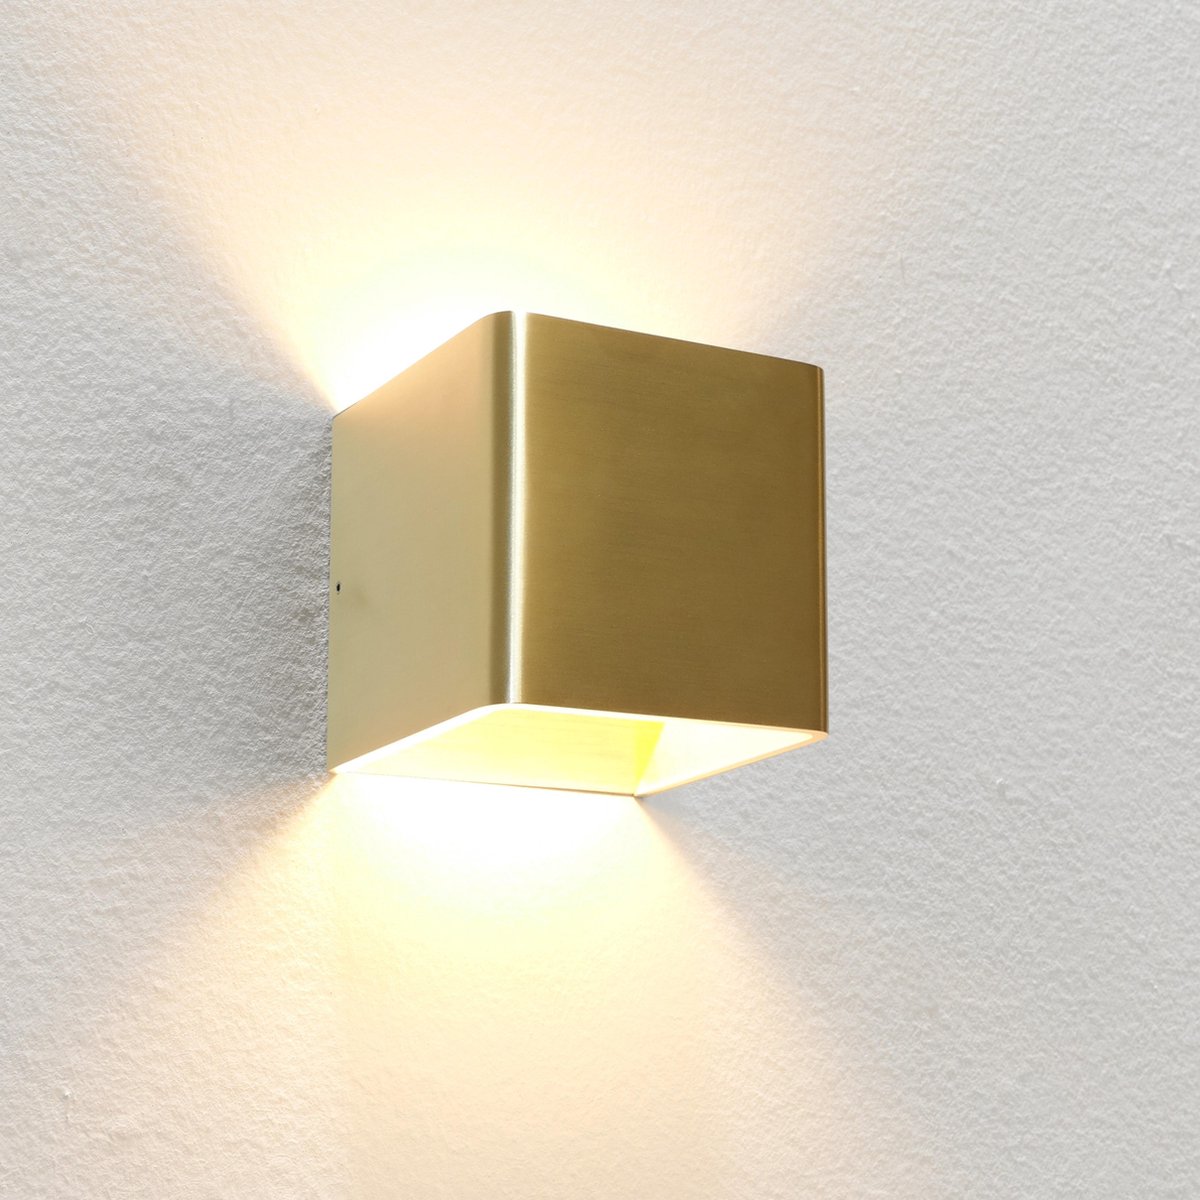 Wandlamp Fulda Goud - 10x10x10cm - LED 6W 2700K 540lm - IP20 - Dimbaar > wandlamp binnen goud | wandlamp goud | wandlamp hal goud | wandlamp woonkamer goud | wandlamp slaapkamer goud | muurlamp goud | led lamp goud | sfeer lamp goud | designlamp goud